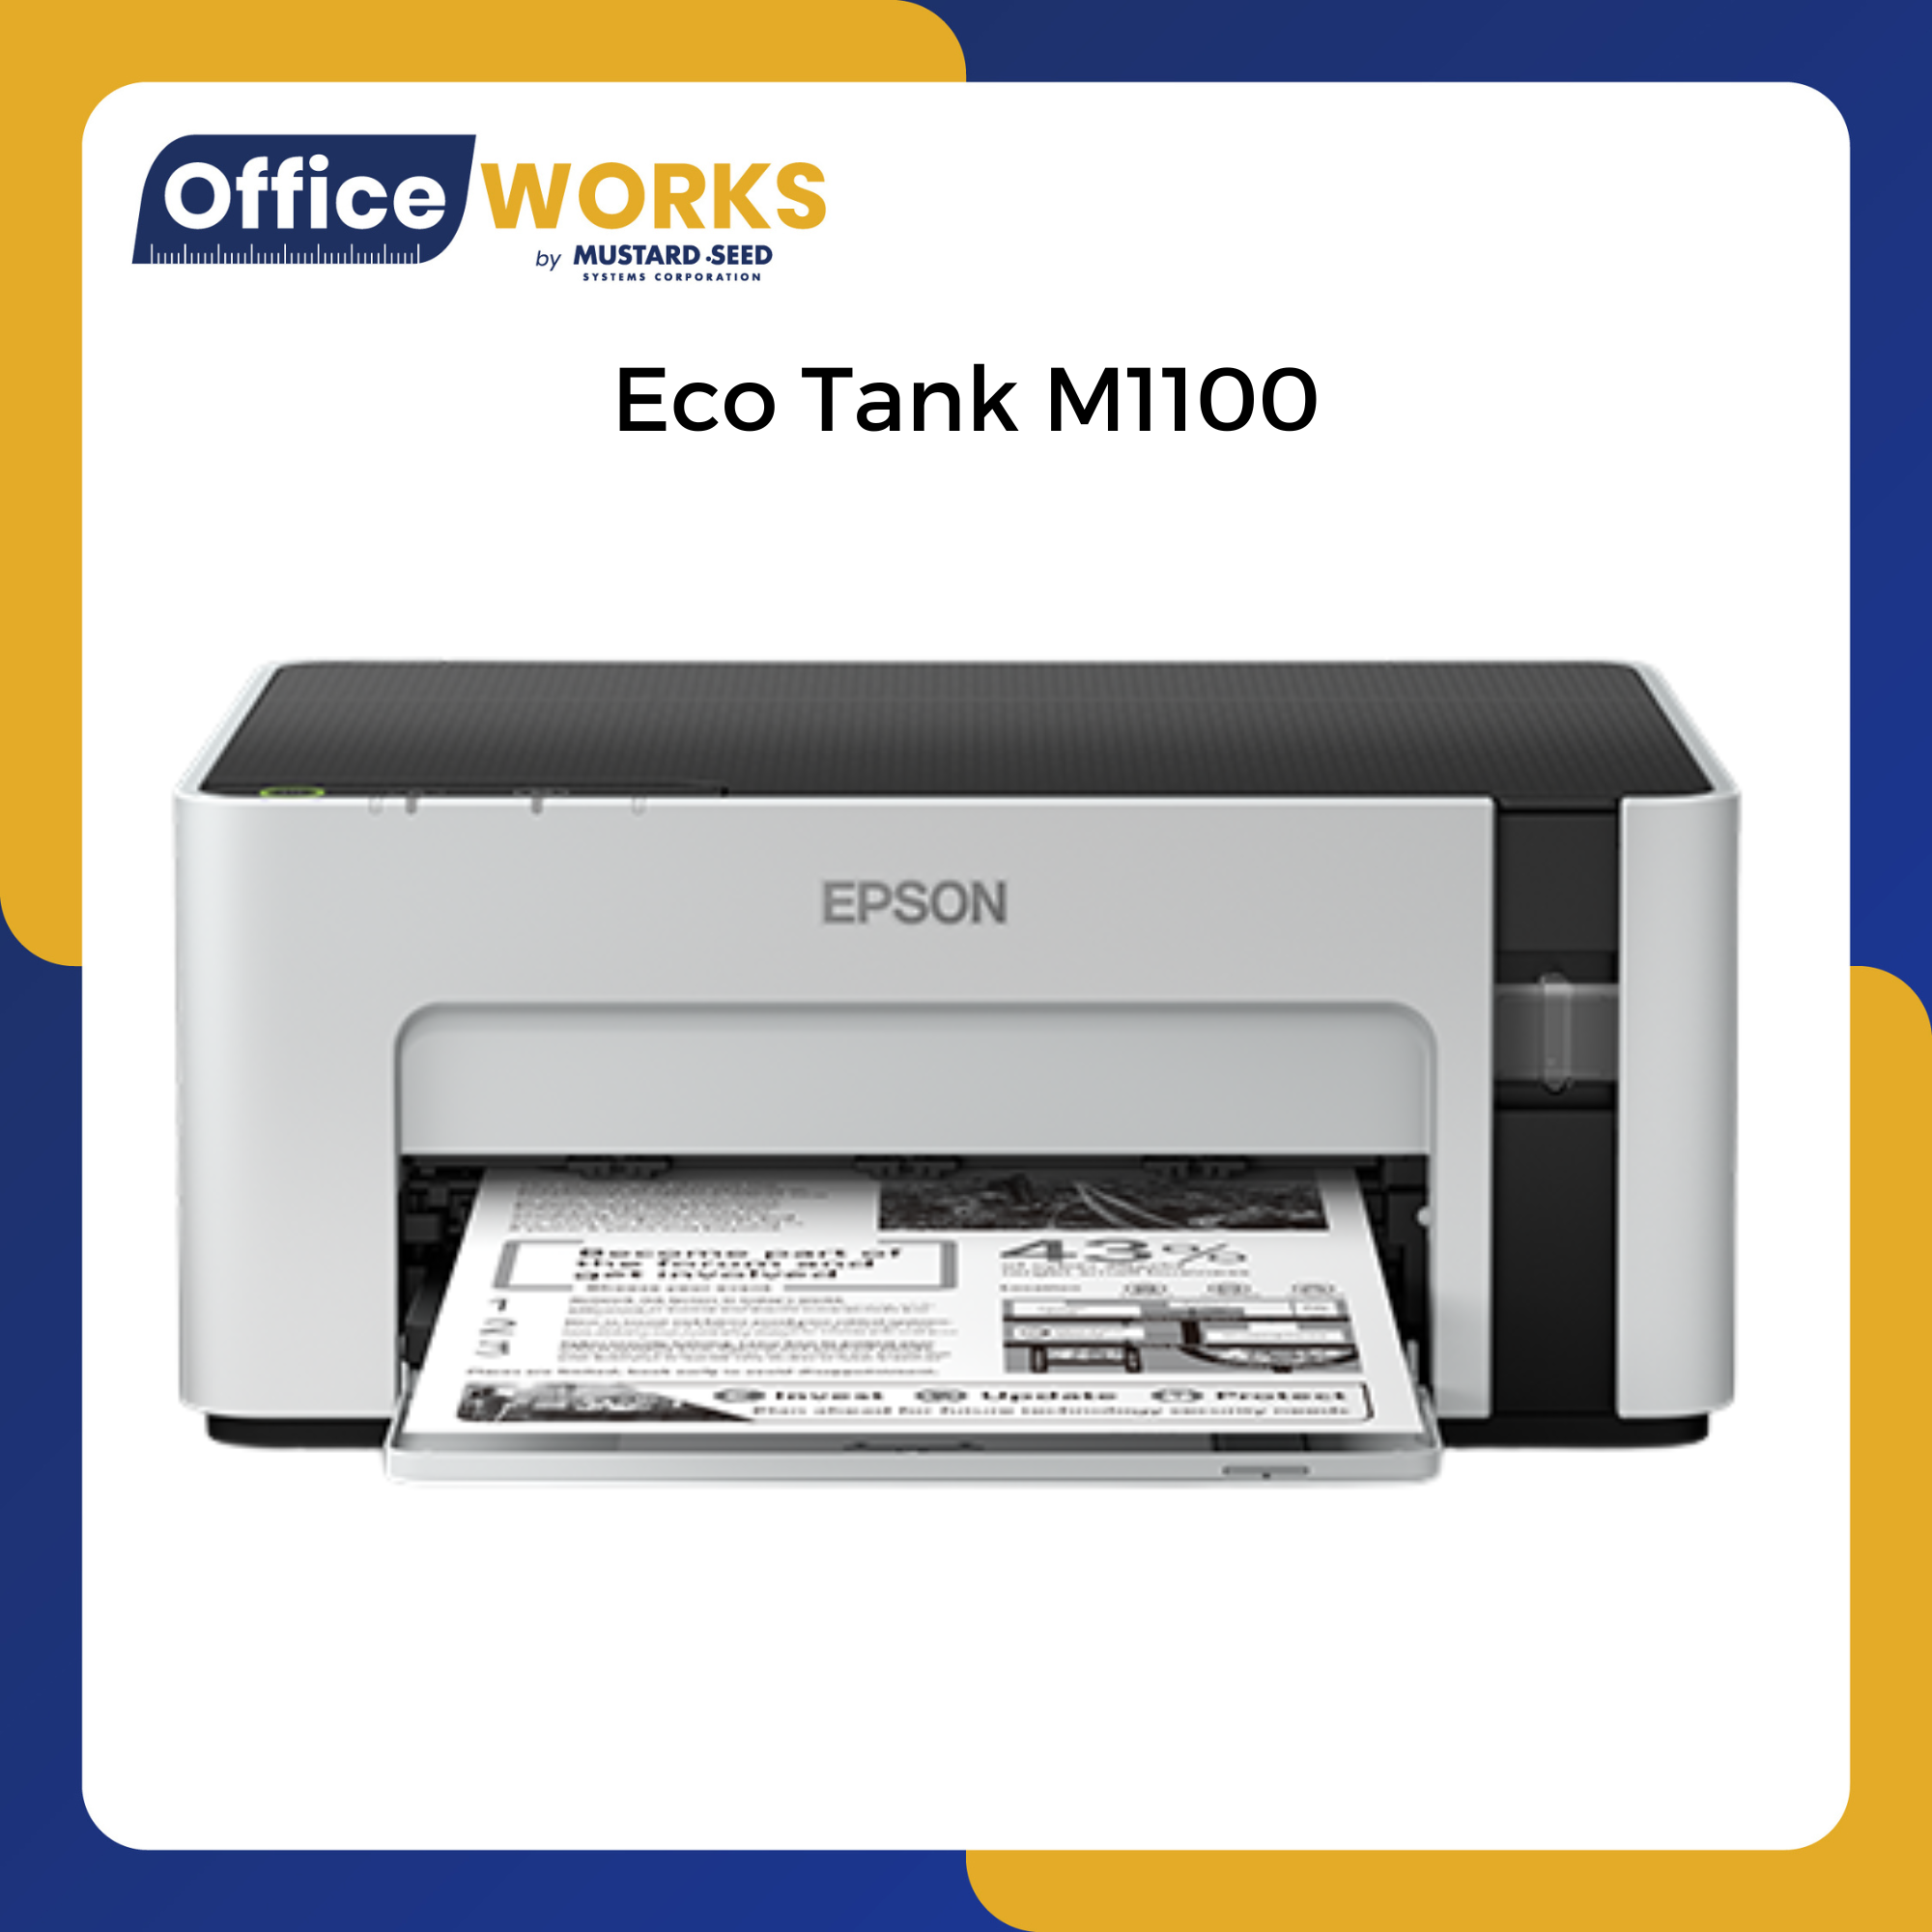 Epson Eco Tank M1100 Single Function Monochrome Printer Ink Tank Printer Lazada Ph 4698